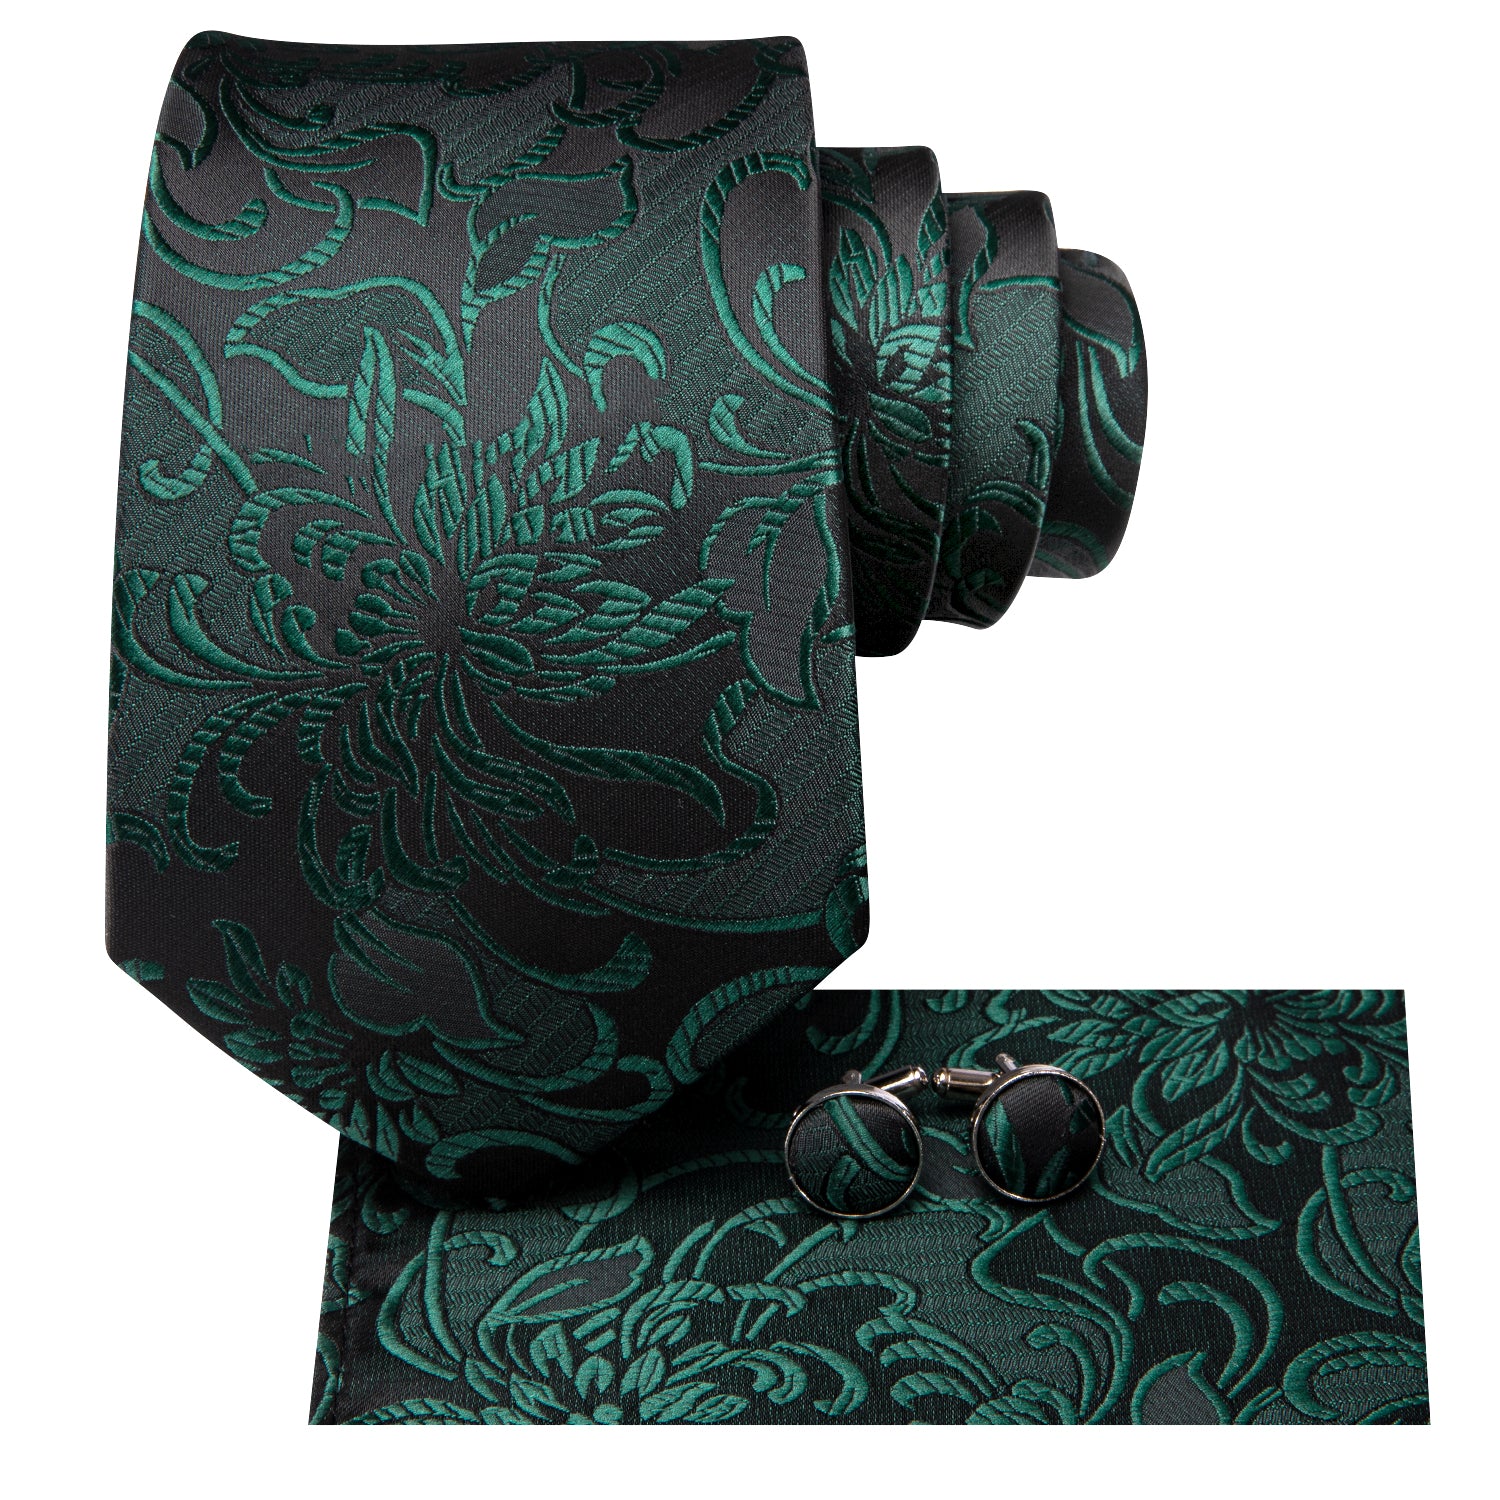 Hi-Tie Deep Green Paisley Men's Tie Pocket Square Cufflinks Set